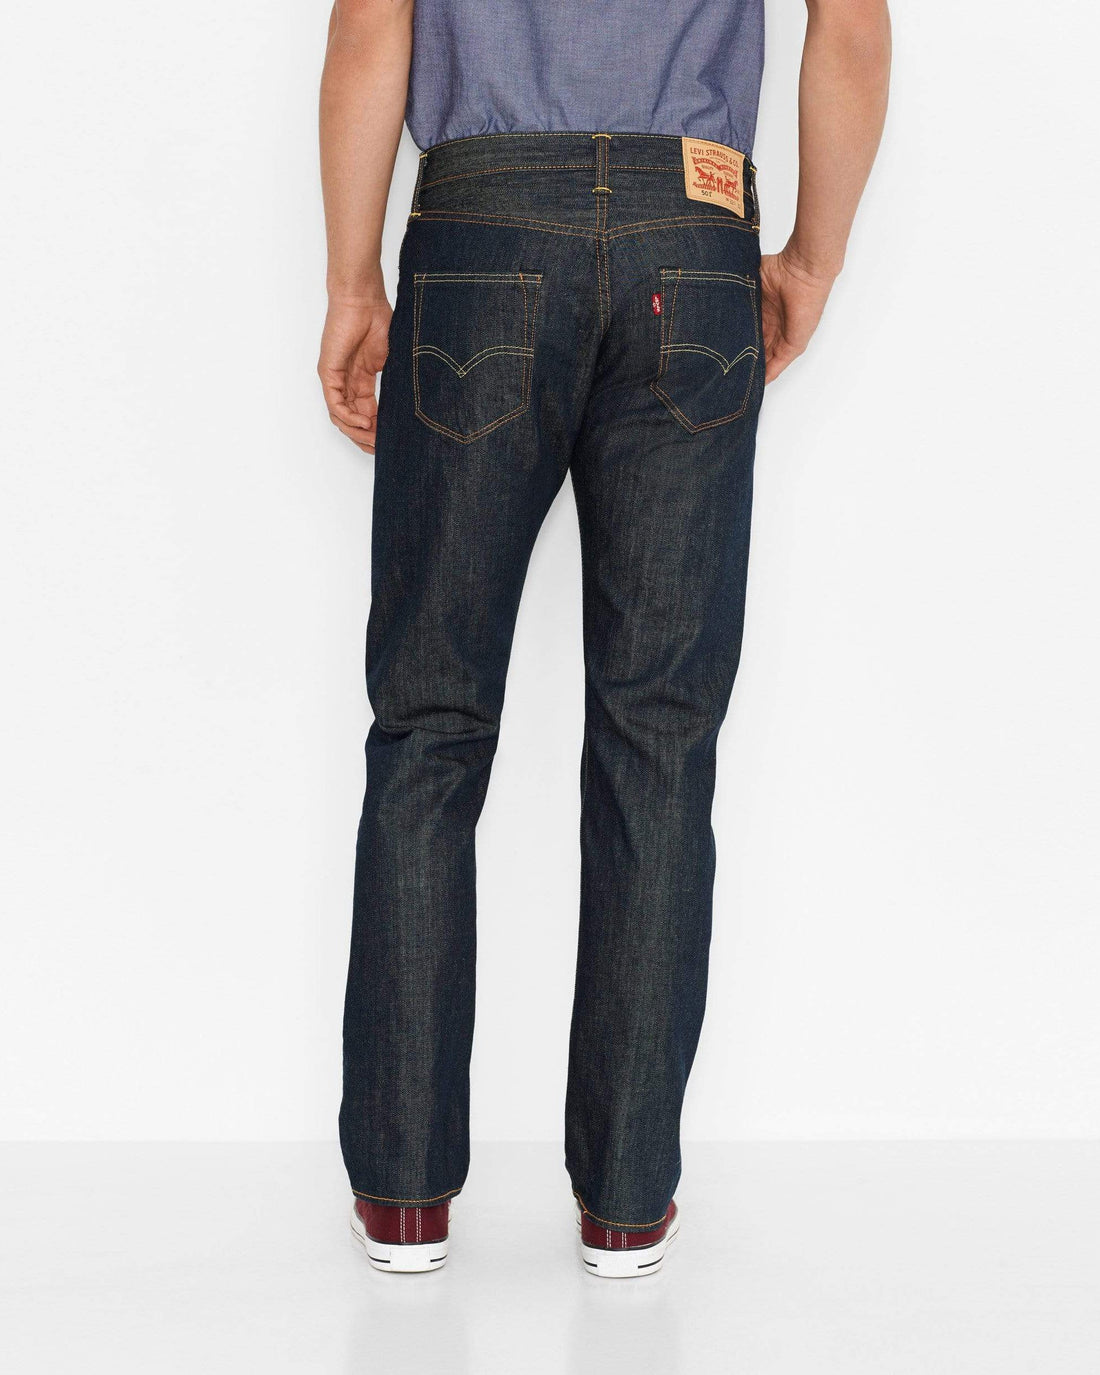 Levis 501 Original Regular Fit Mens Jeans - Marlon - Jeans and Street ...